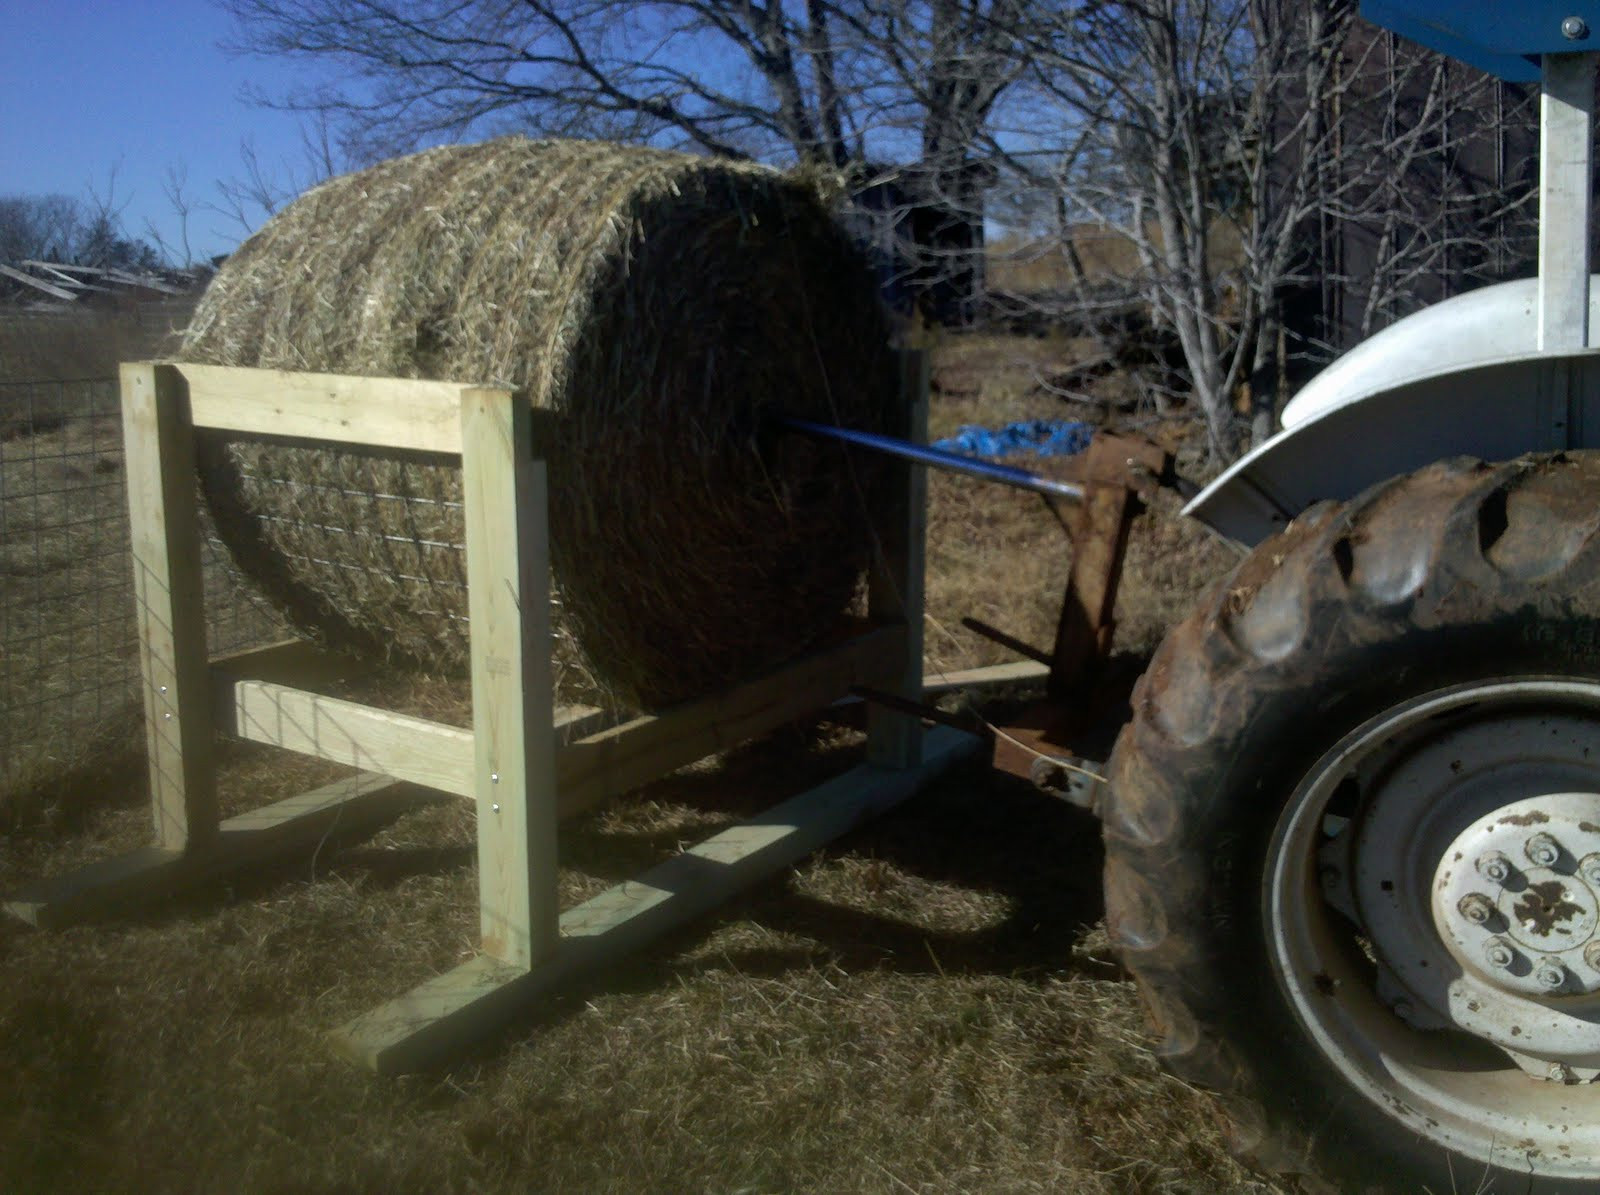 Best ideas about DIY Hay Feeder
. Save or Pin Generation Farm Kiko Goats Hay feeder part deux Now.